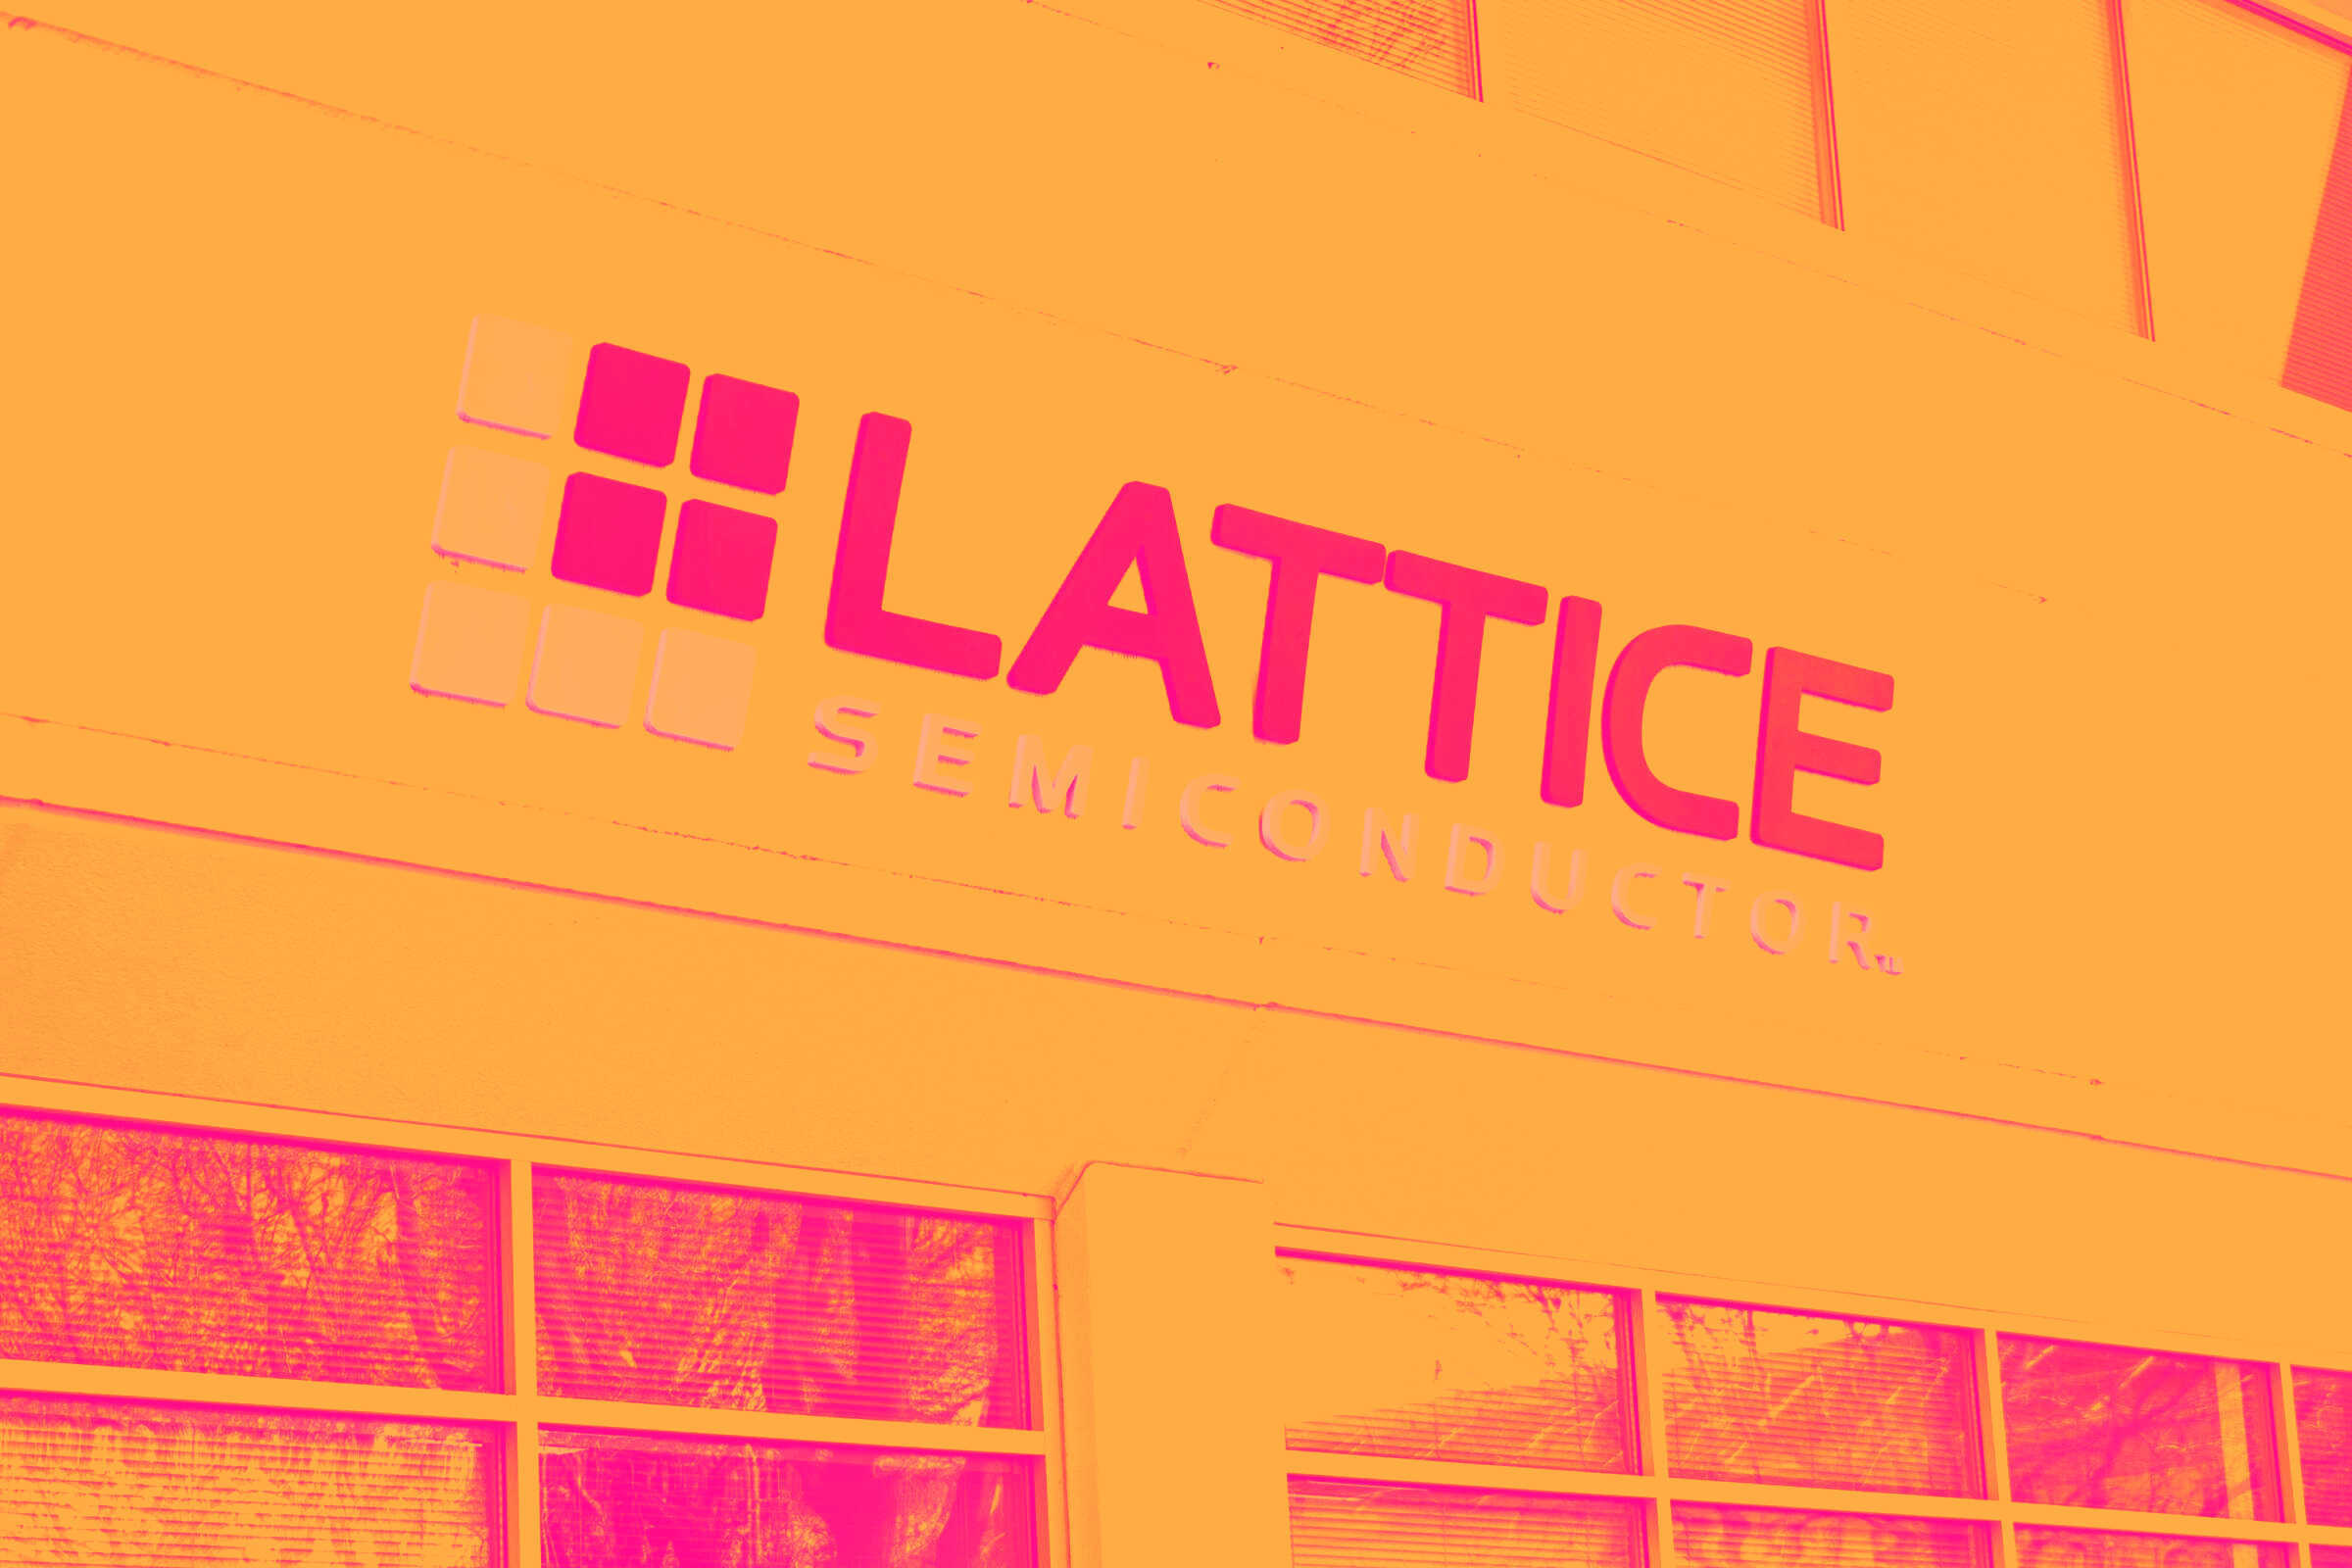 Lattice semiconductor corporation cover image 3d045dcf9f4f